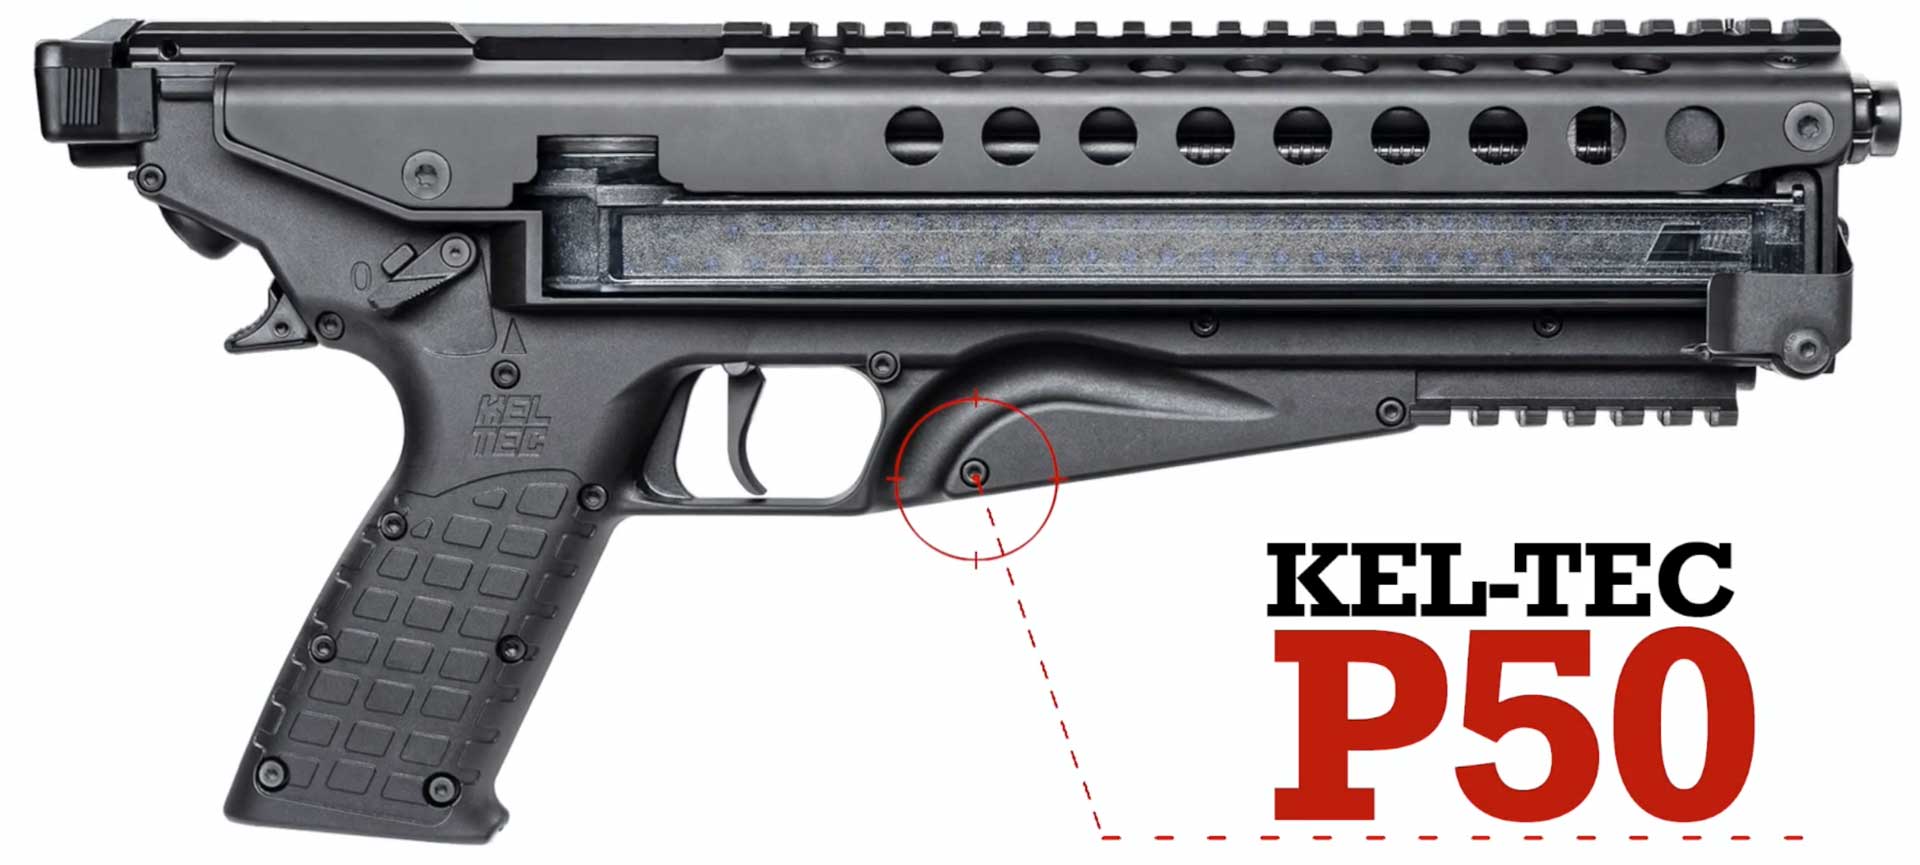 right side kel-tec semi-automatic black pistol text on image noting "Kel-Tec P50"